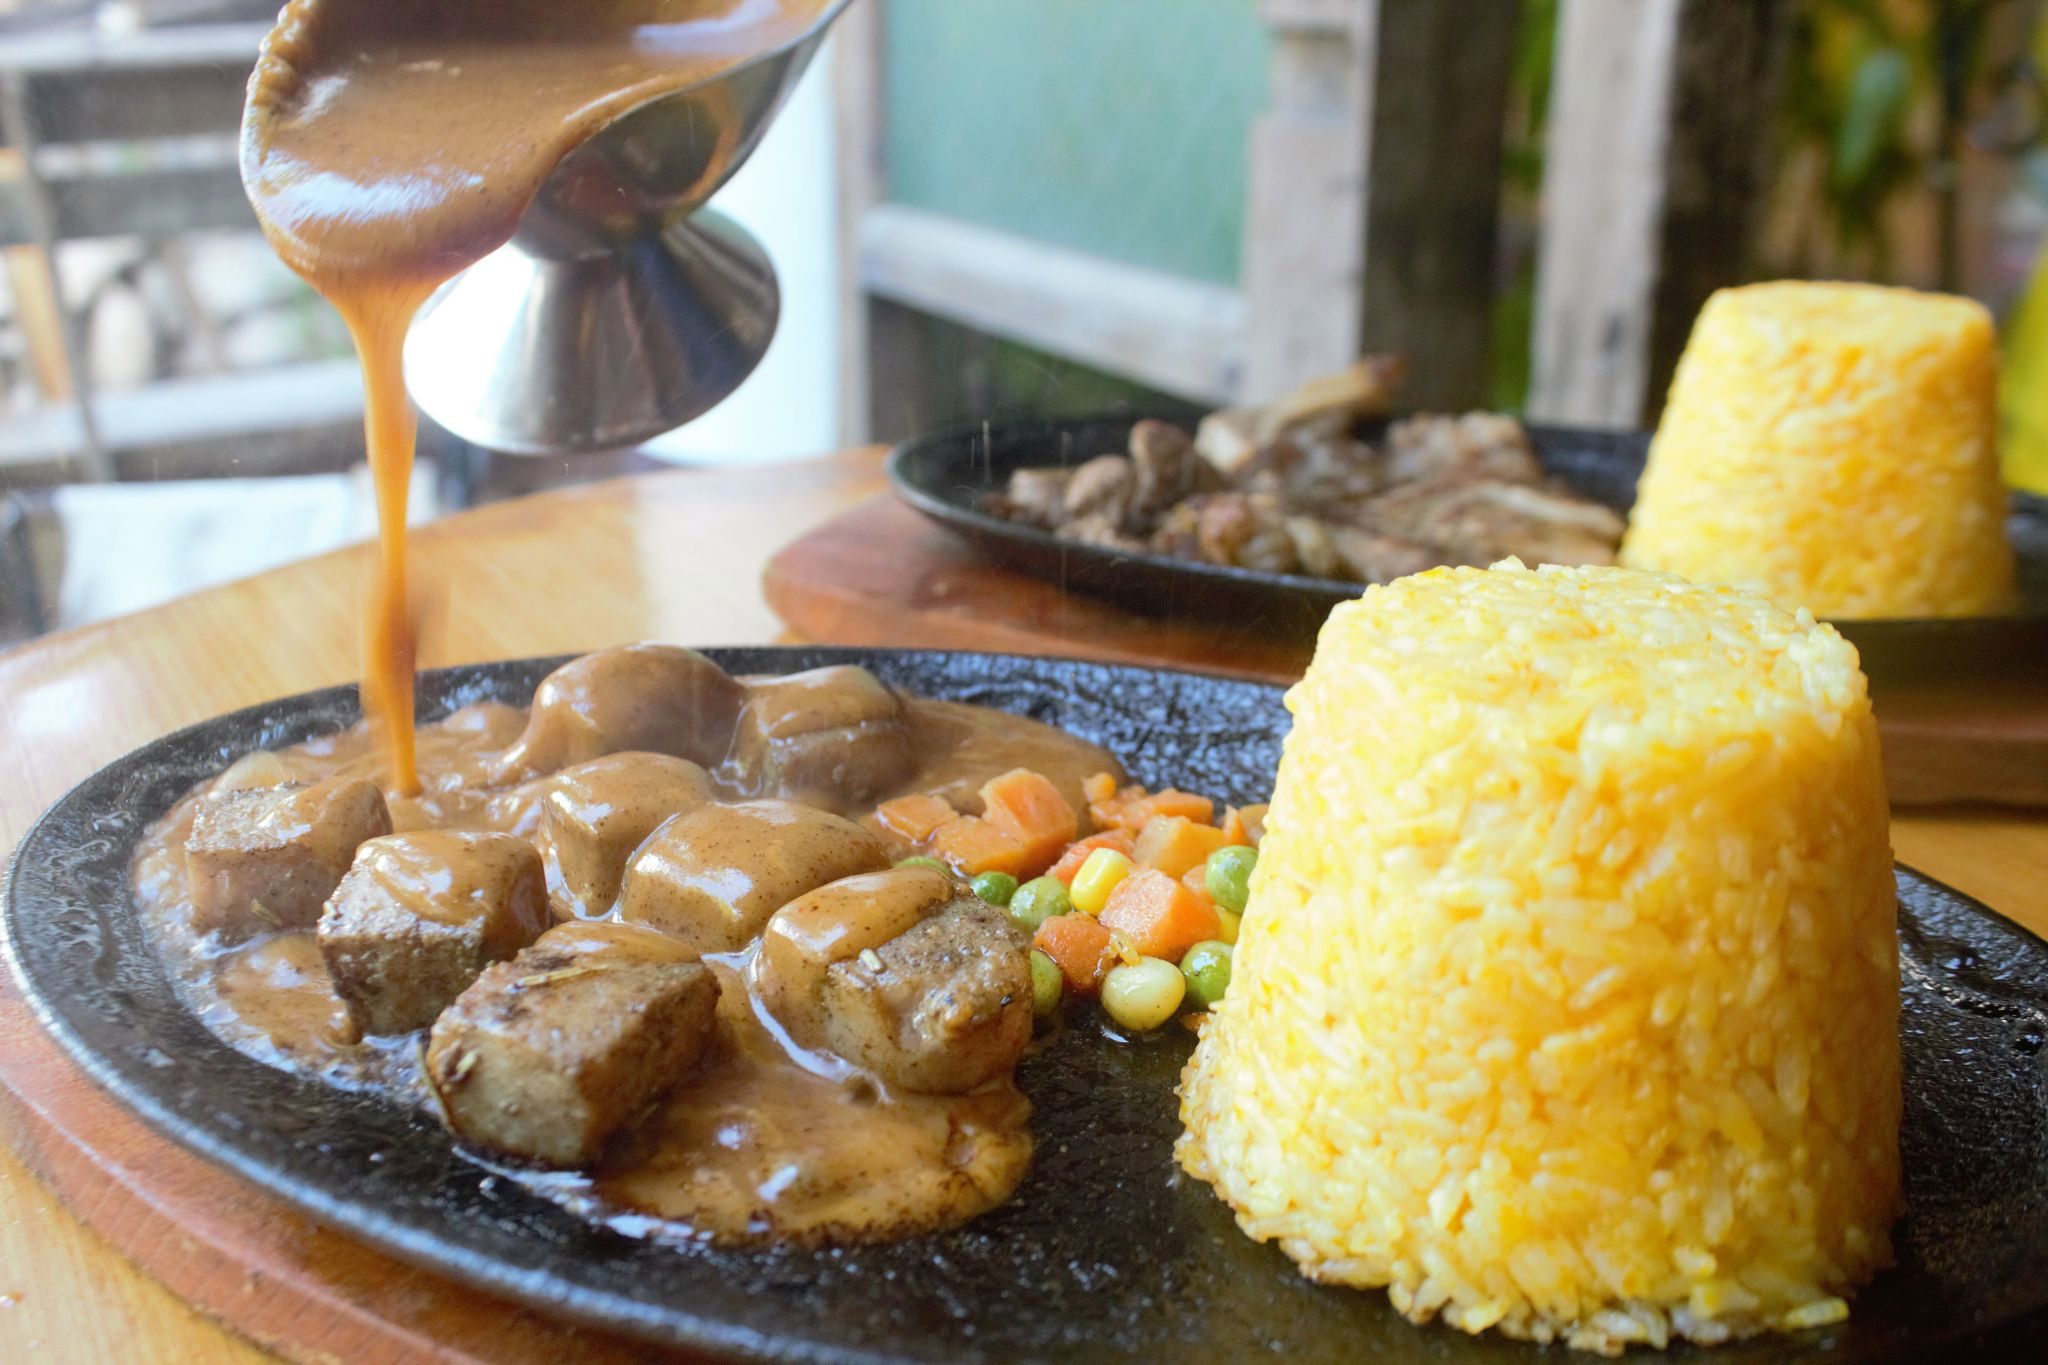 Cebu’s Vicio: Budget-friendly steaks, wagyu beef cubes